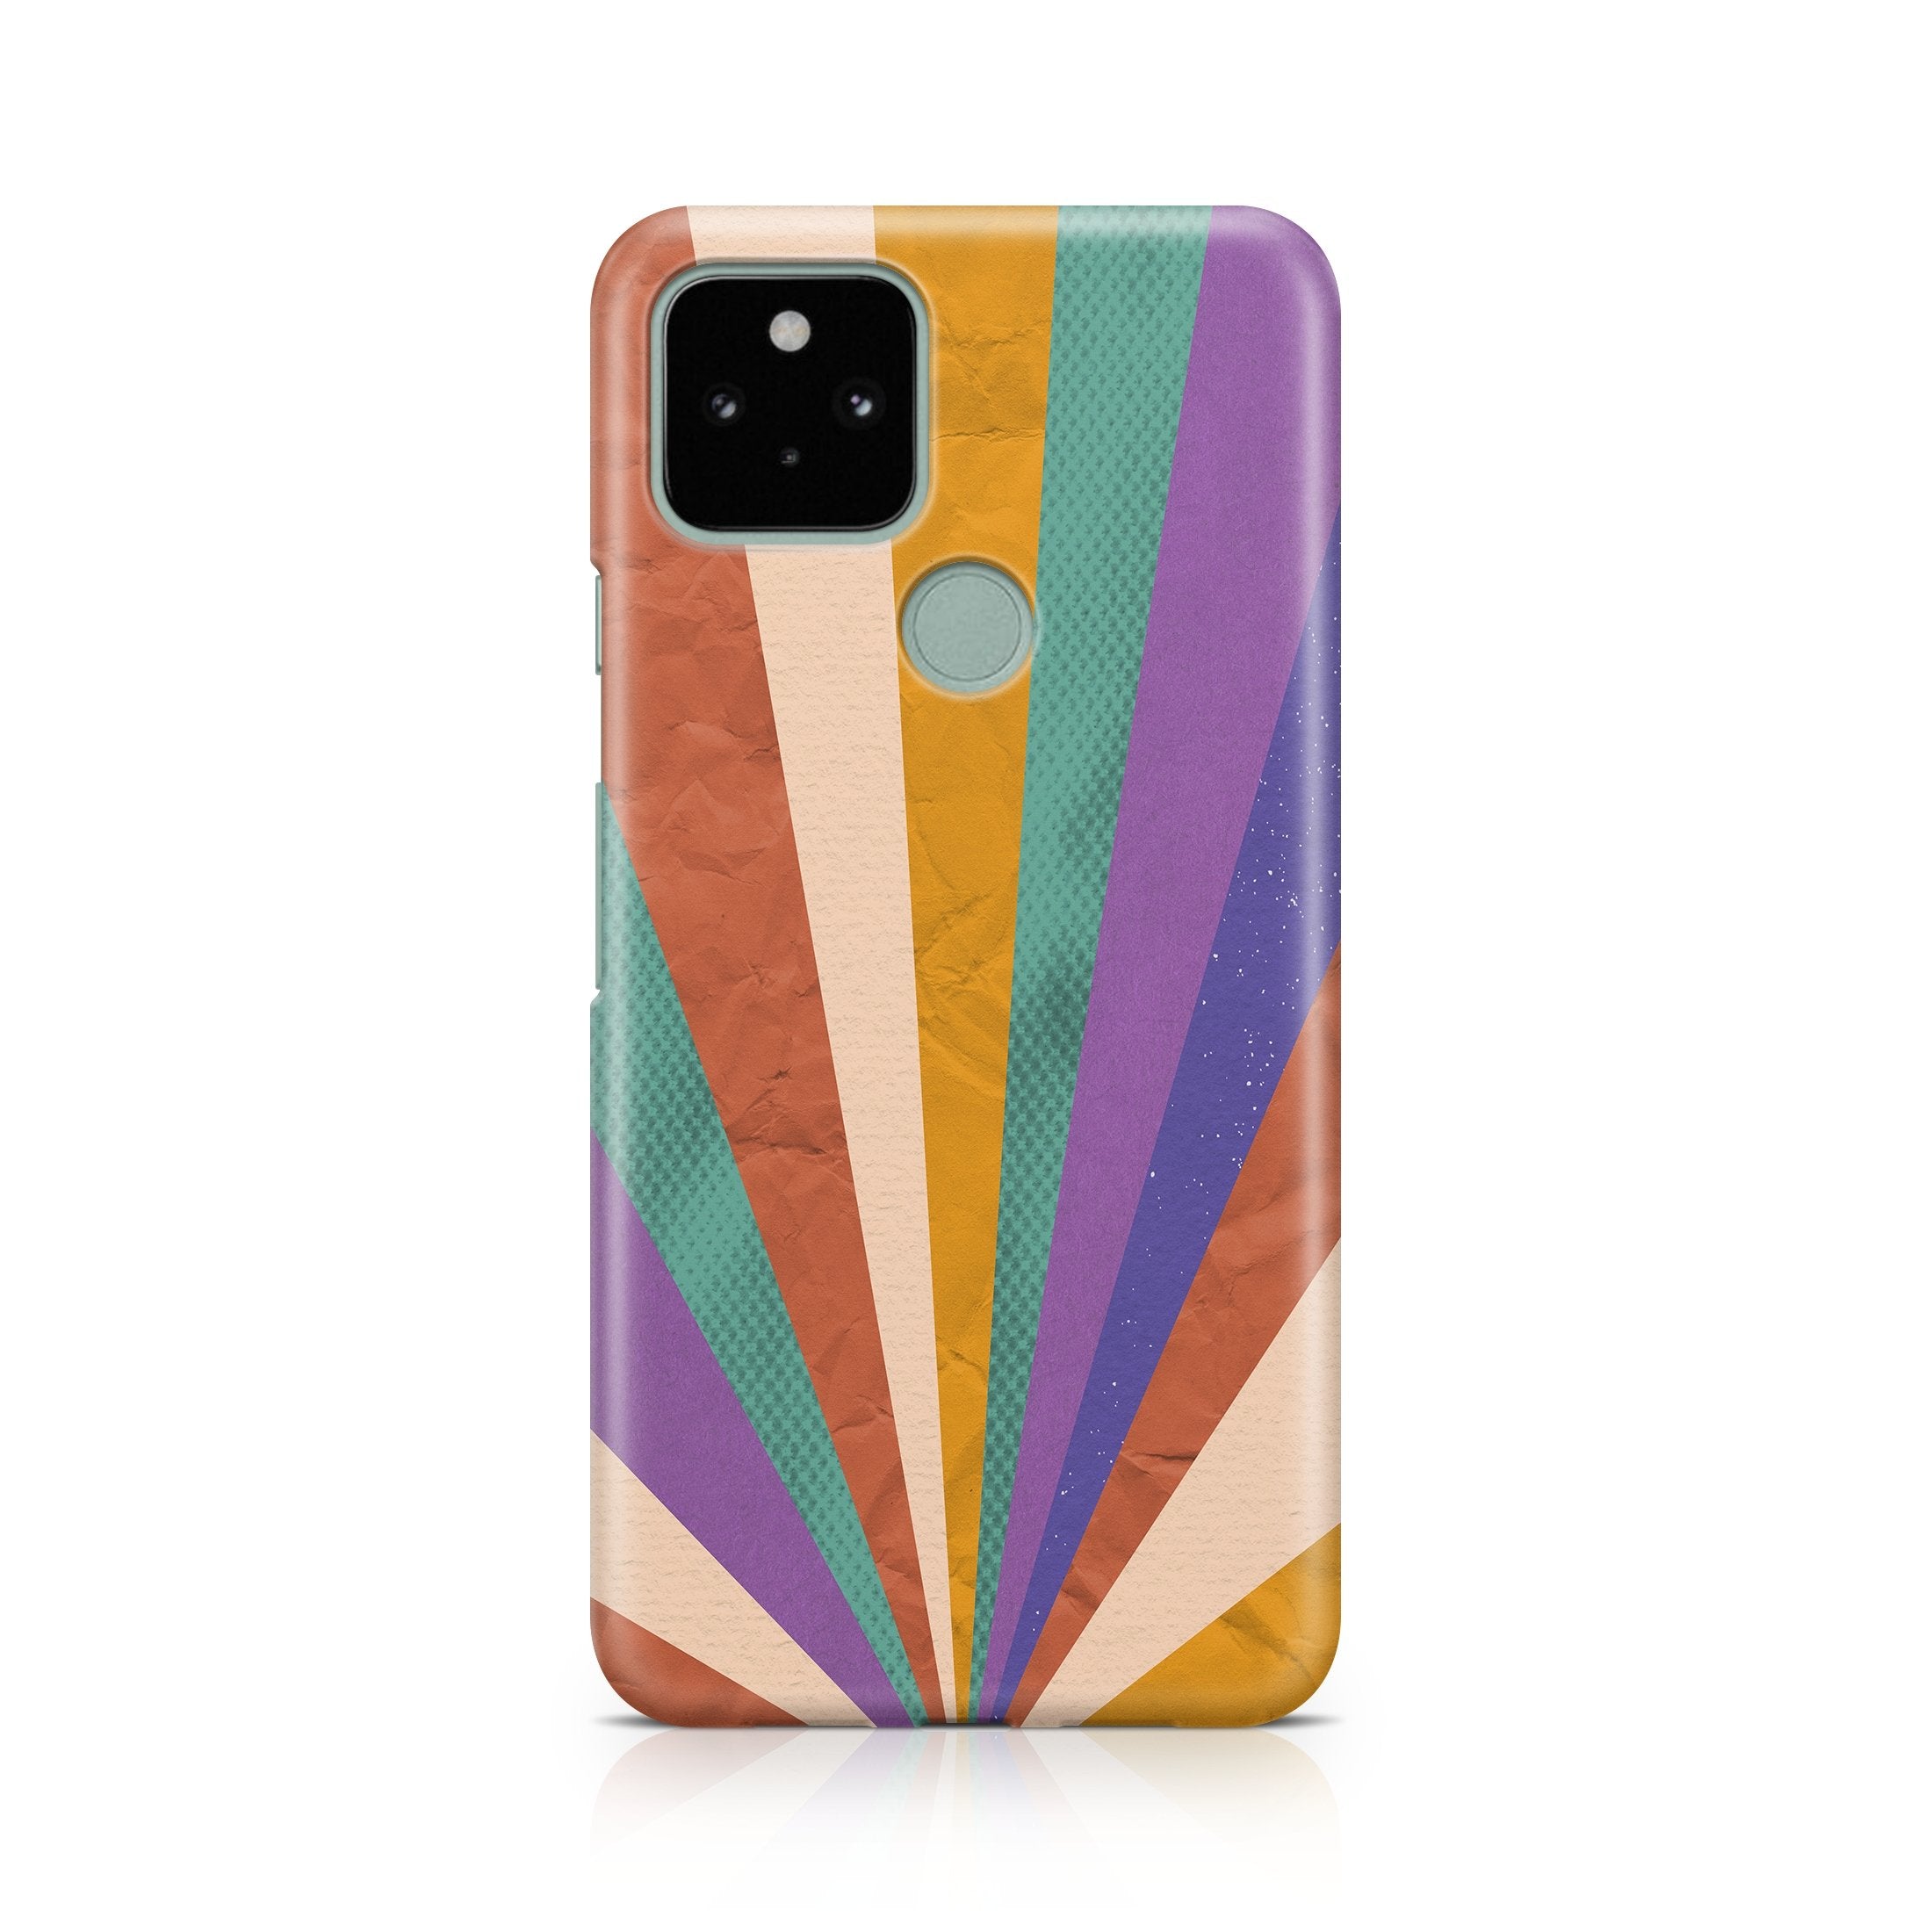 Retro Blast - Google phone case designs by CaseSwagger